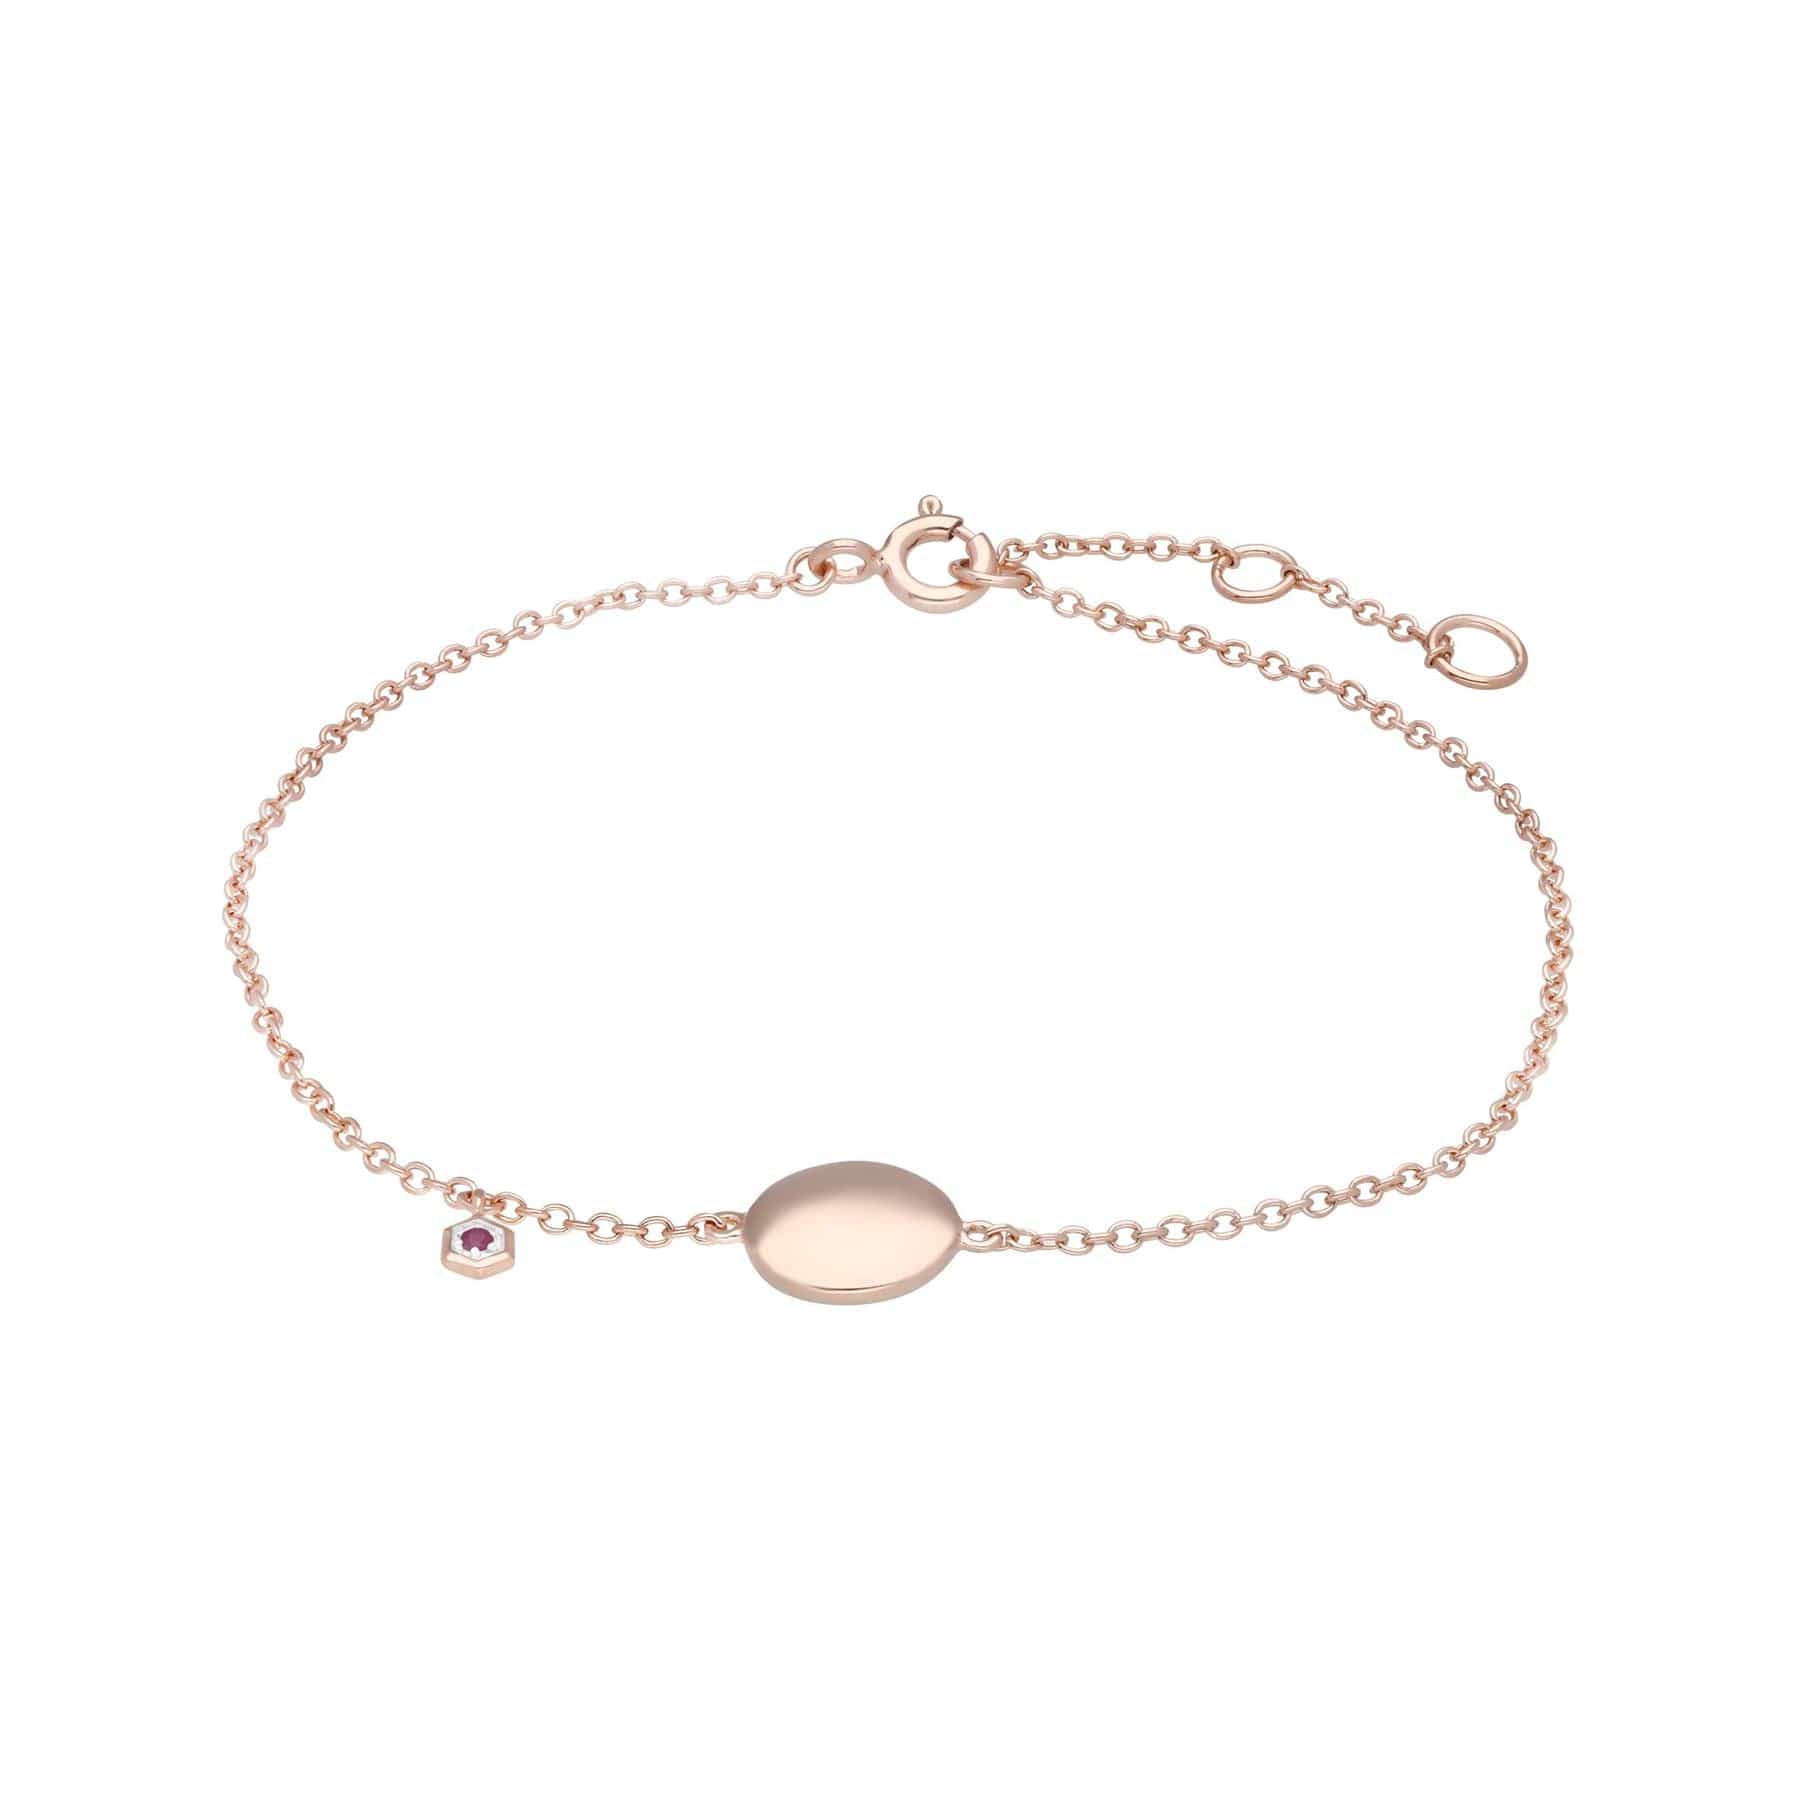 Ruby Engravable Bracelet in Rose Gold Plated Sterling Silver - Gemondo